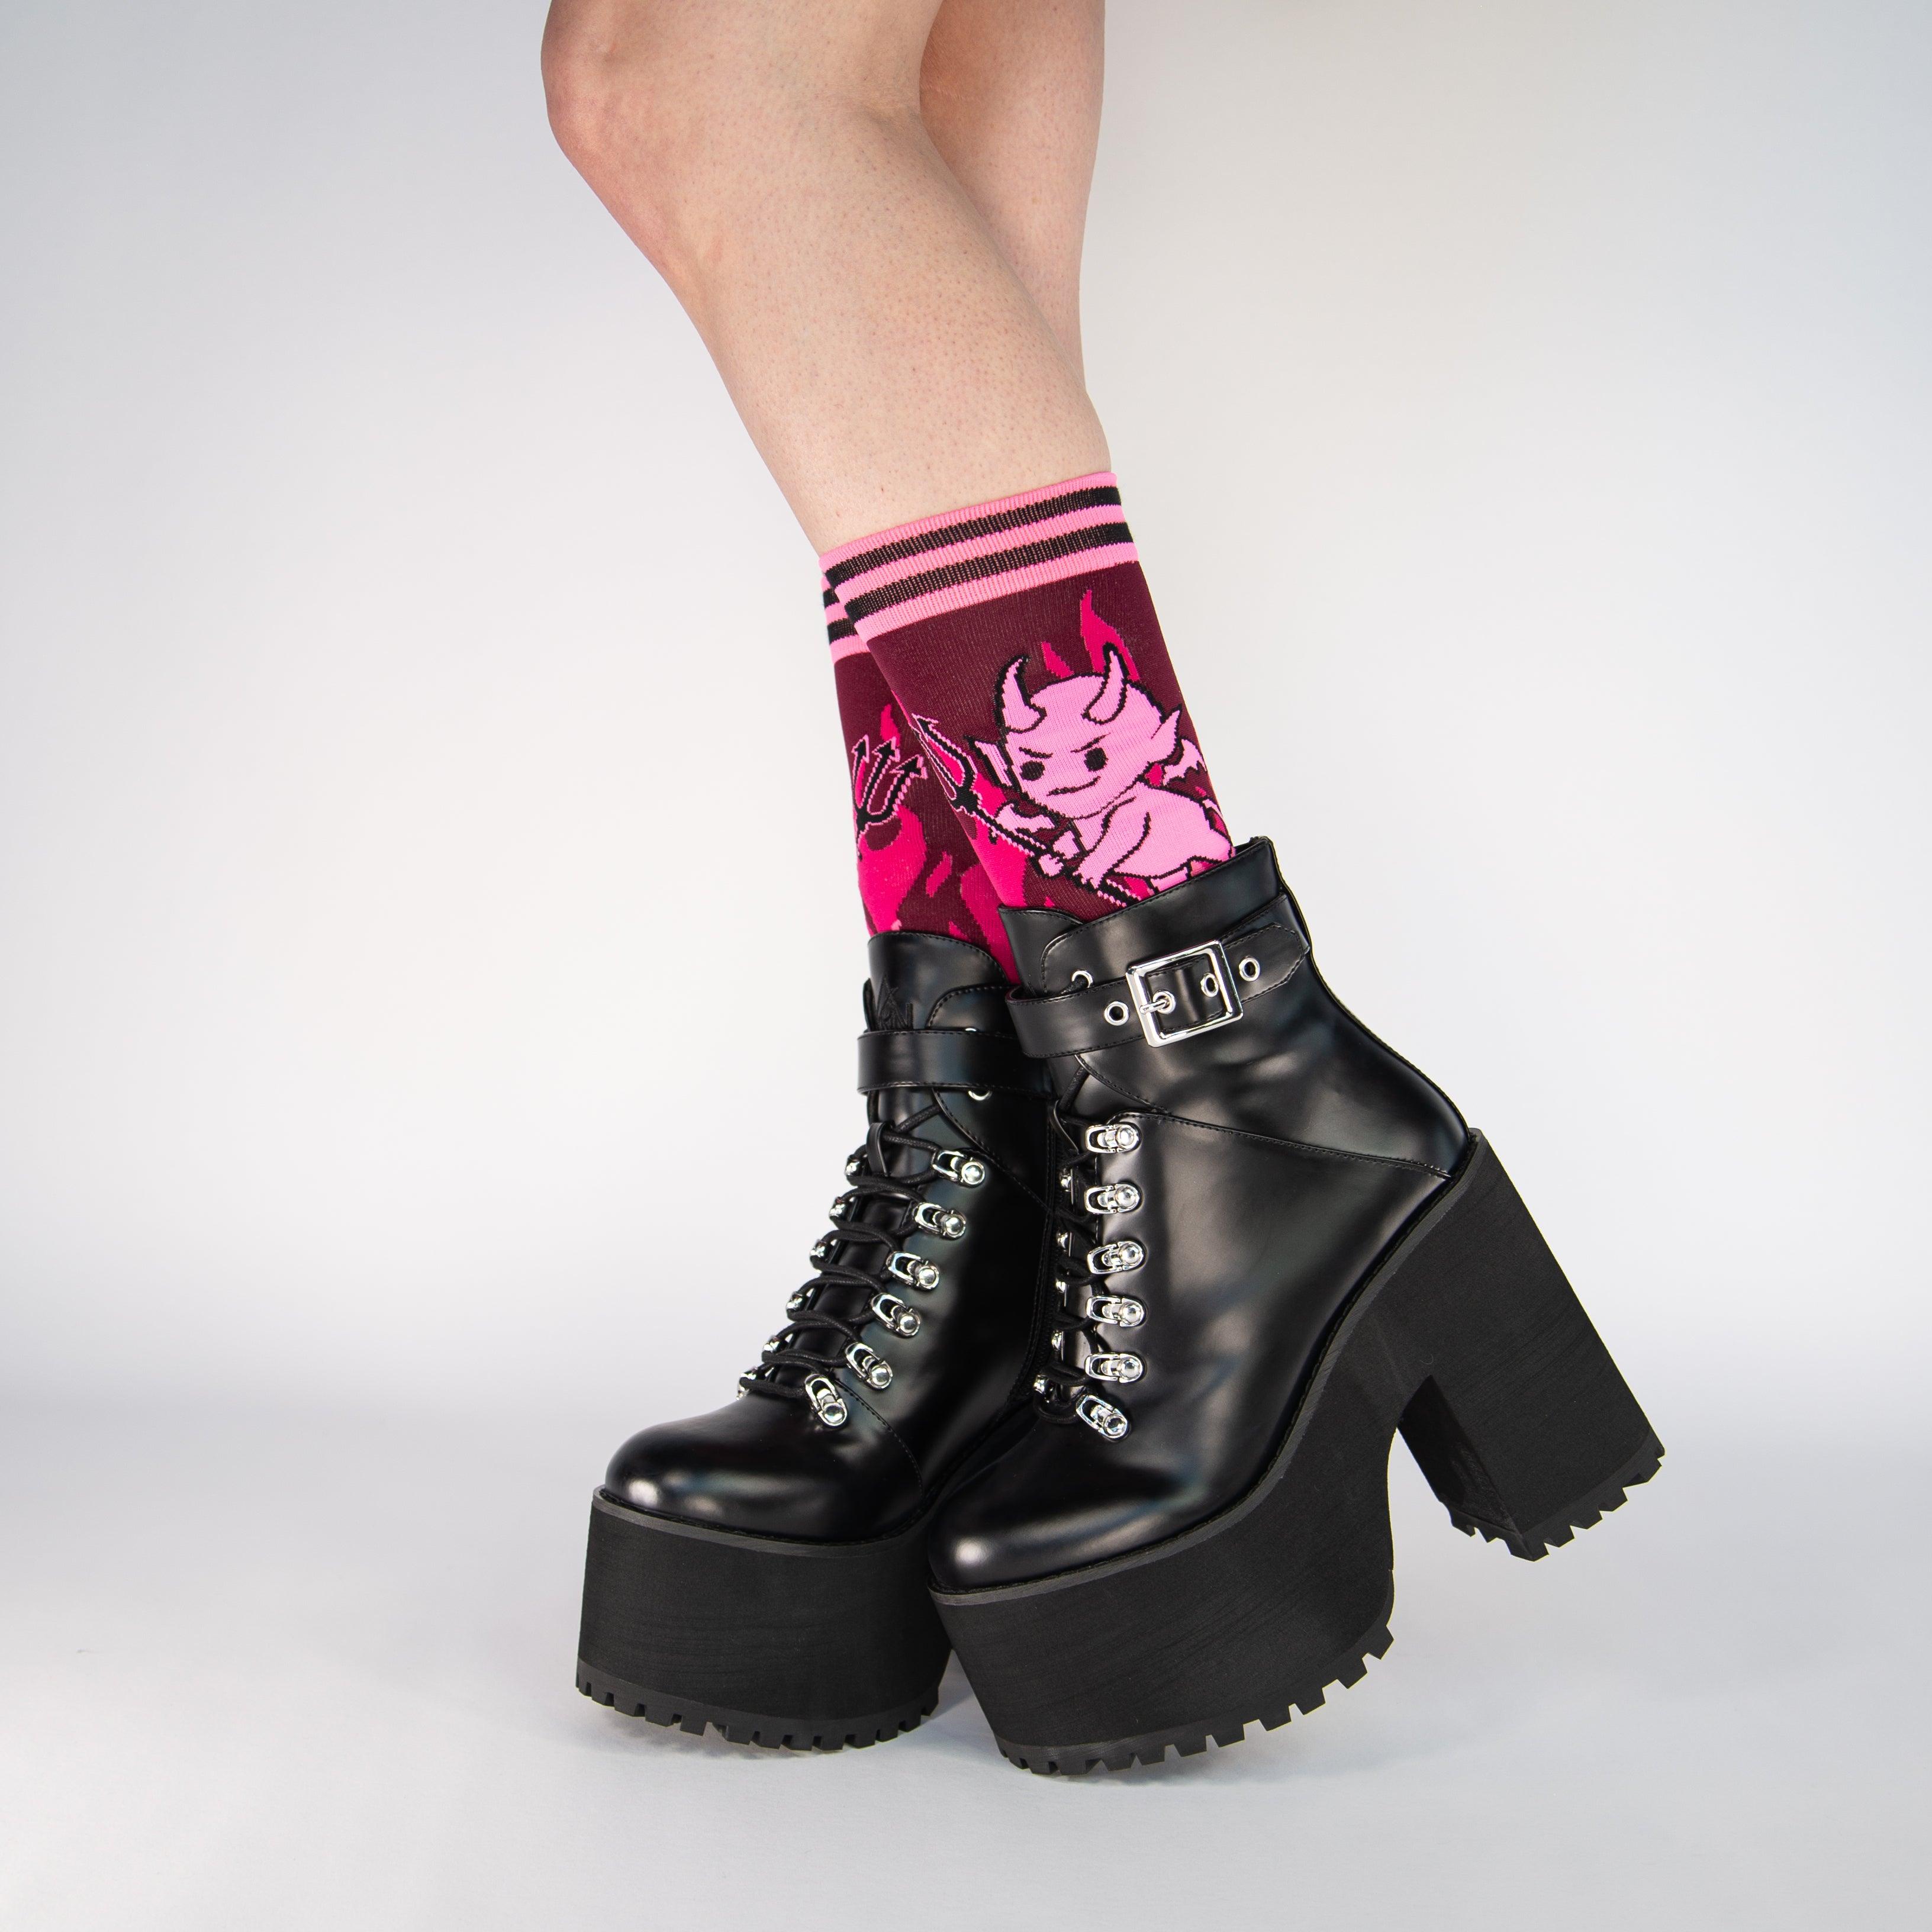 FootClothes x DWYBO Crew Socks Bundle | 2 Designs | FootClothes | Sock Pack | 22P